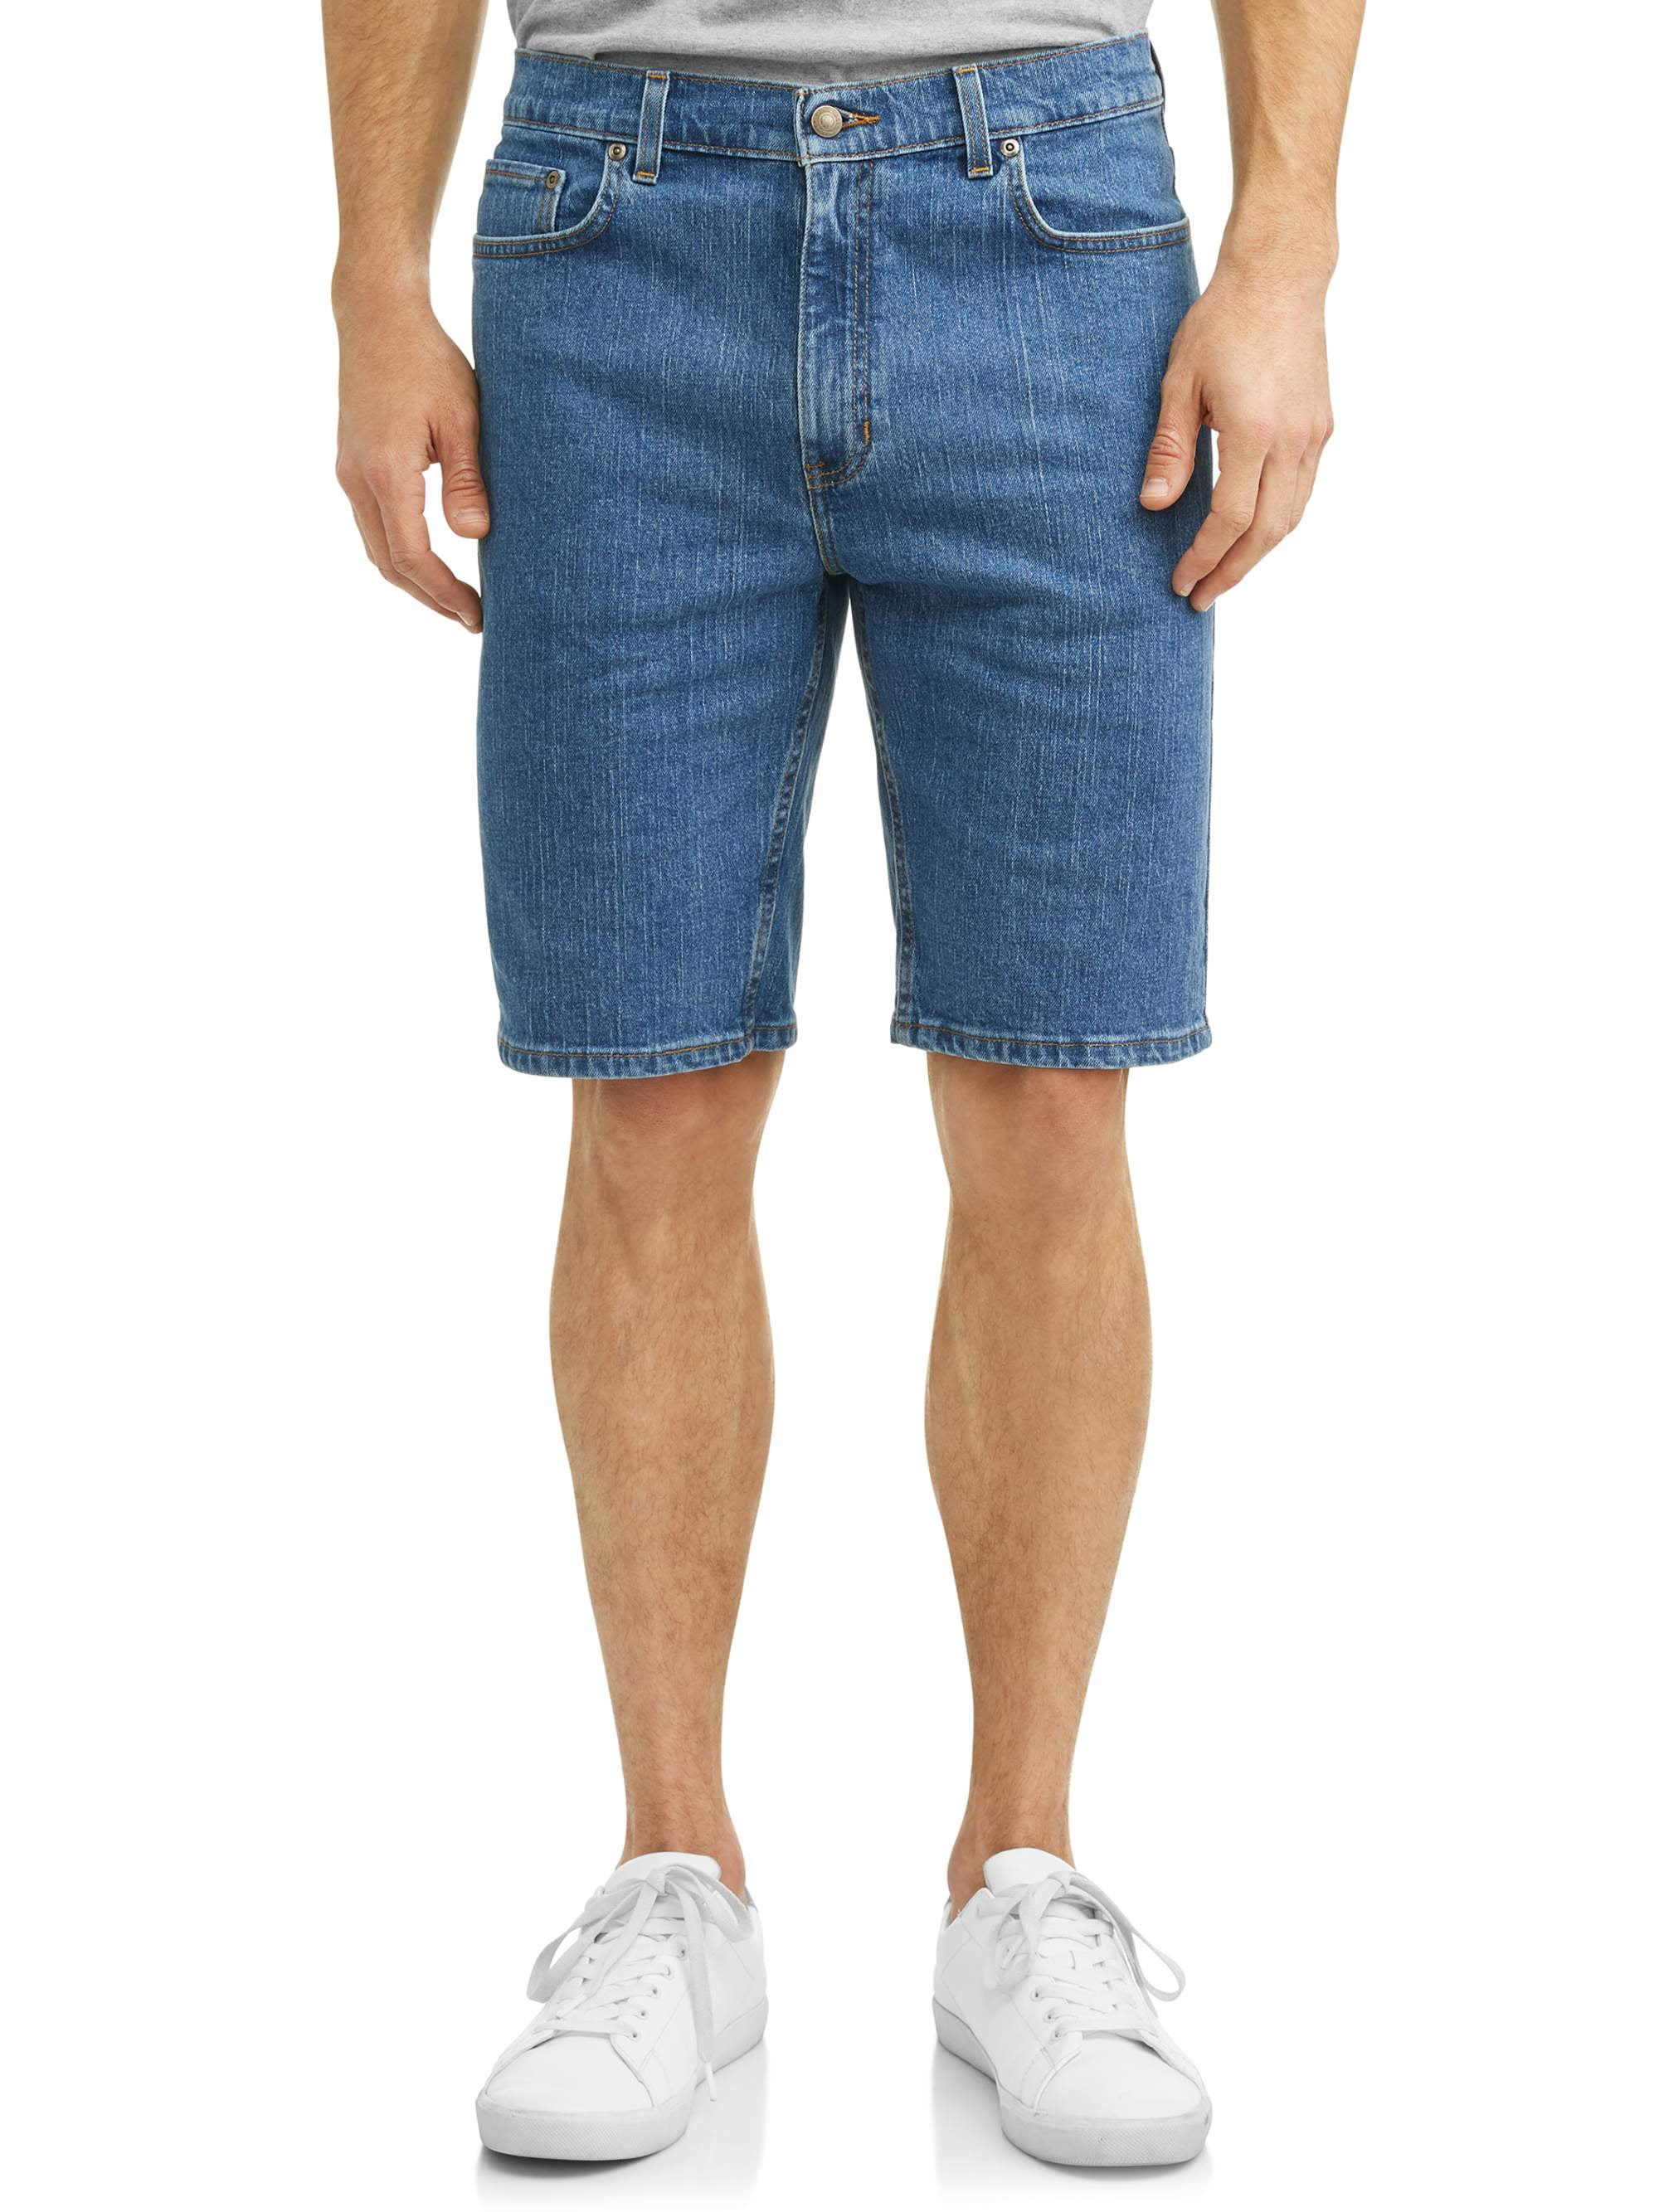 george jean shorts